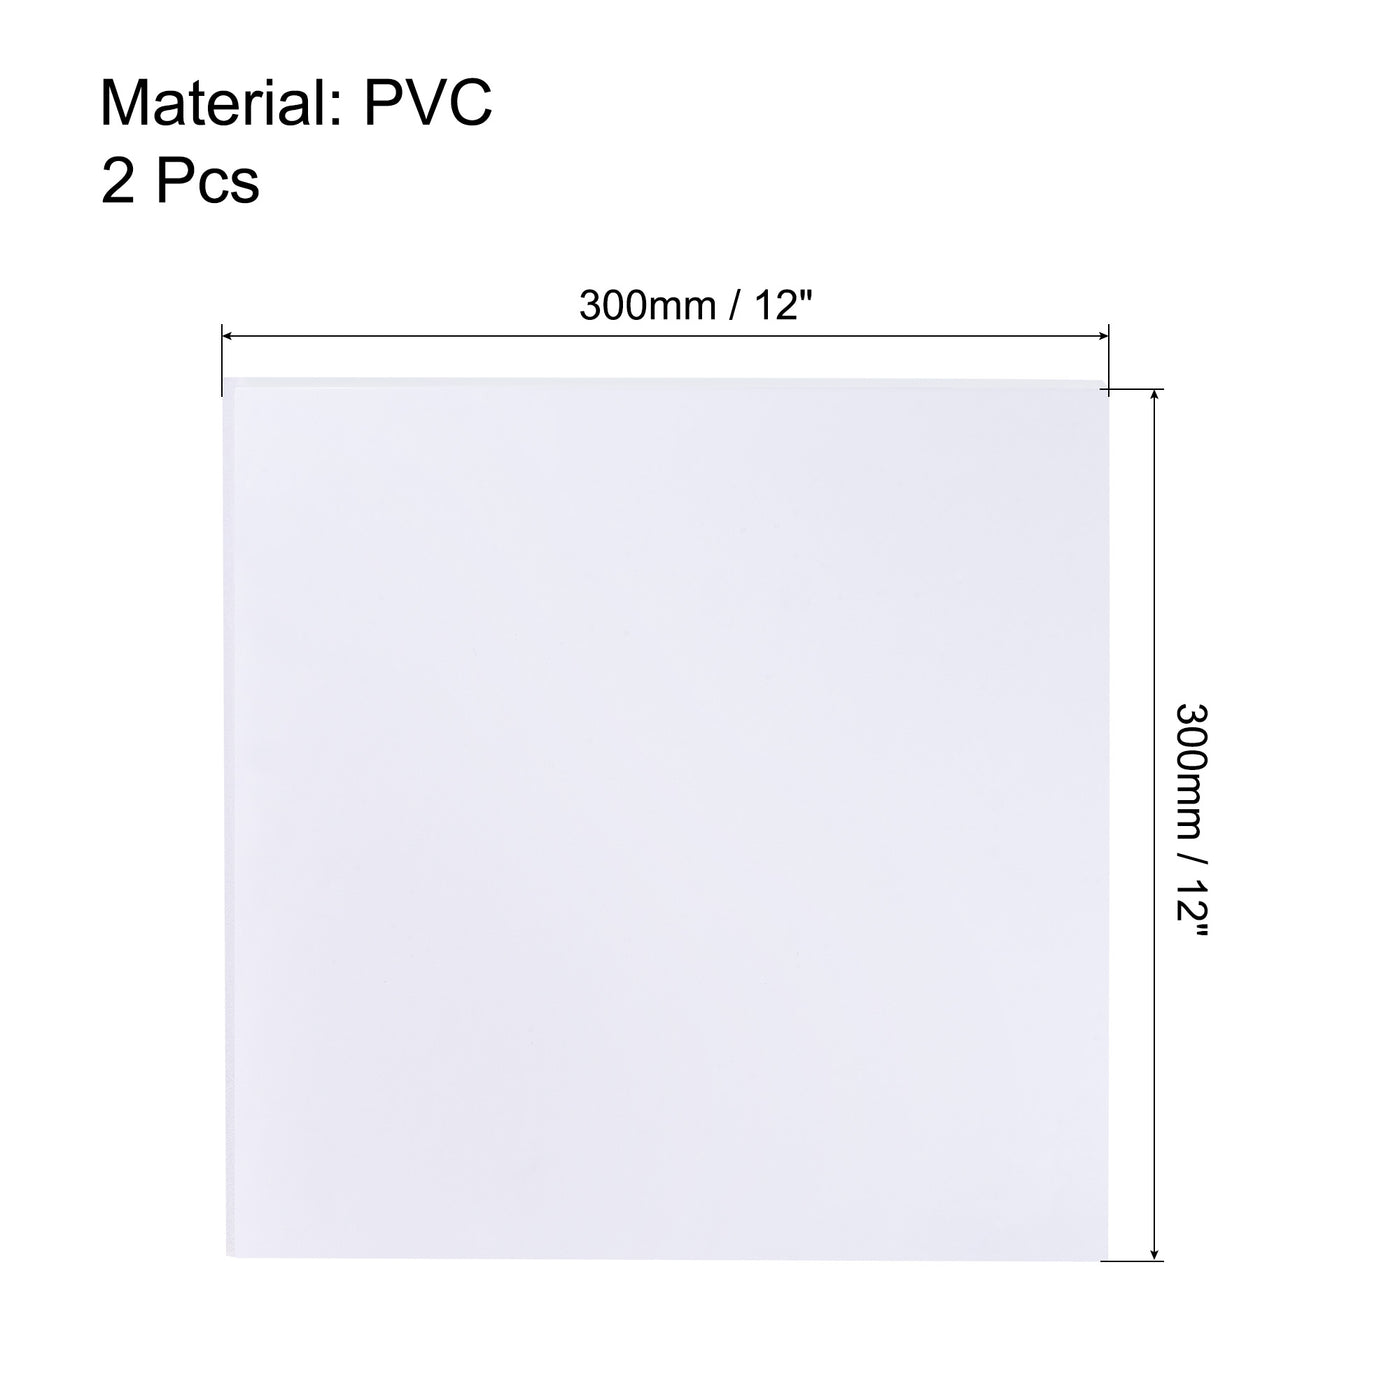 uxcell Uxcell PVC Foam Board Sheet,12mm x 300mm x 300mm,White,Double Sided,2pcs